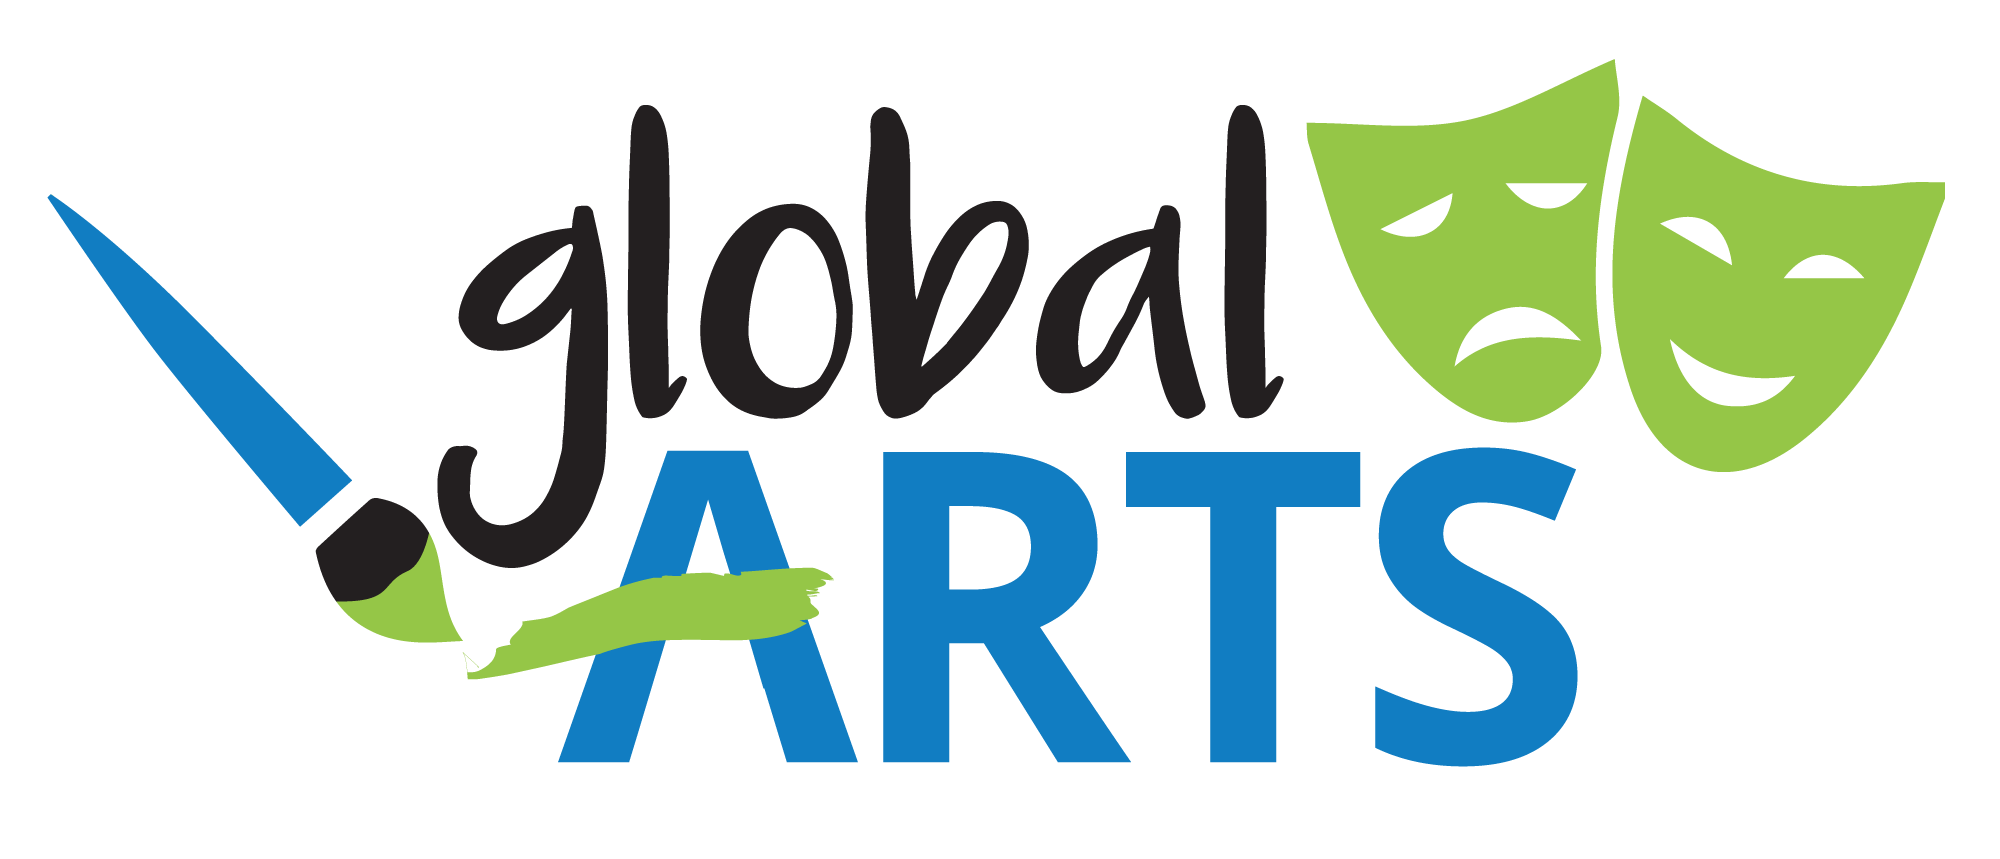 Global Arts program